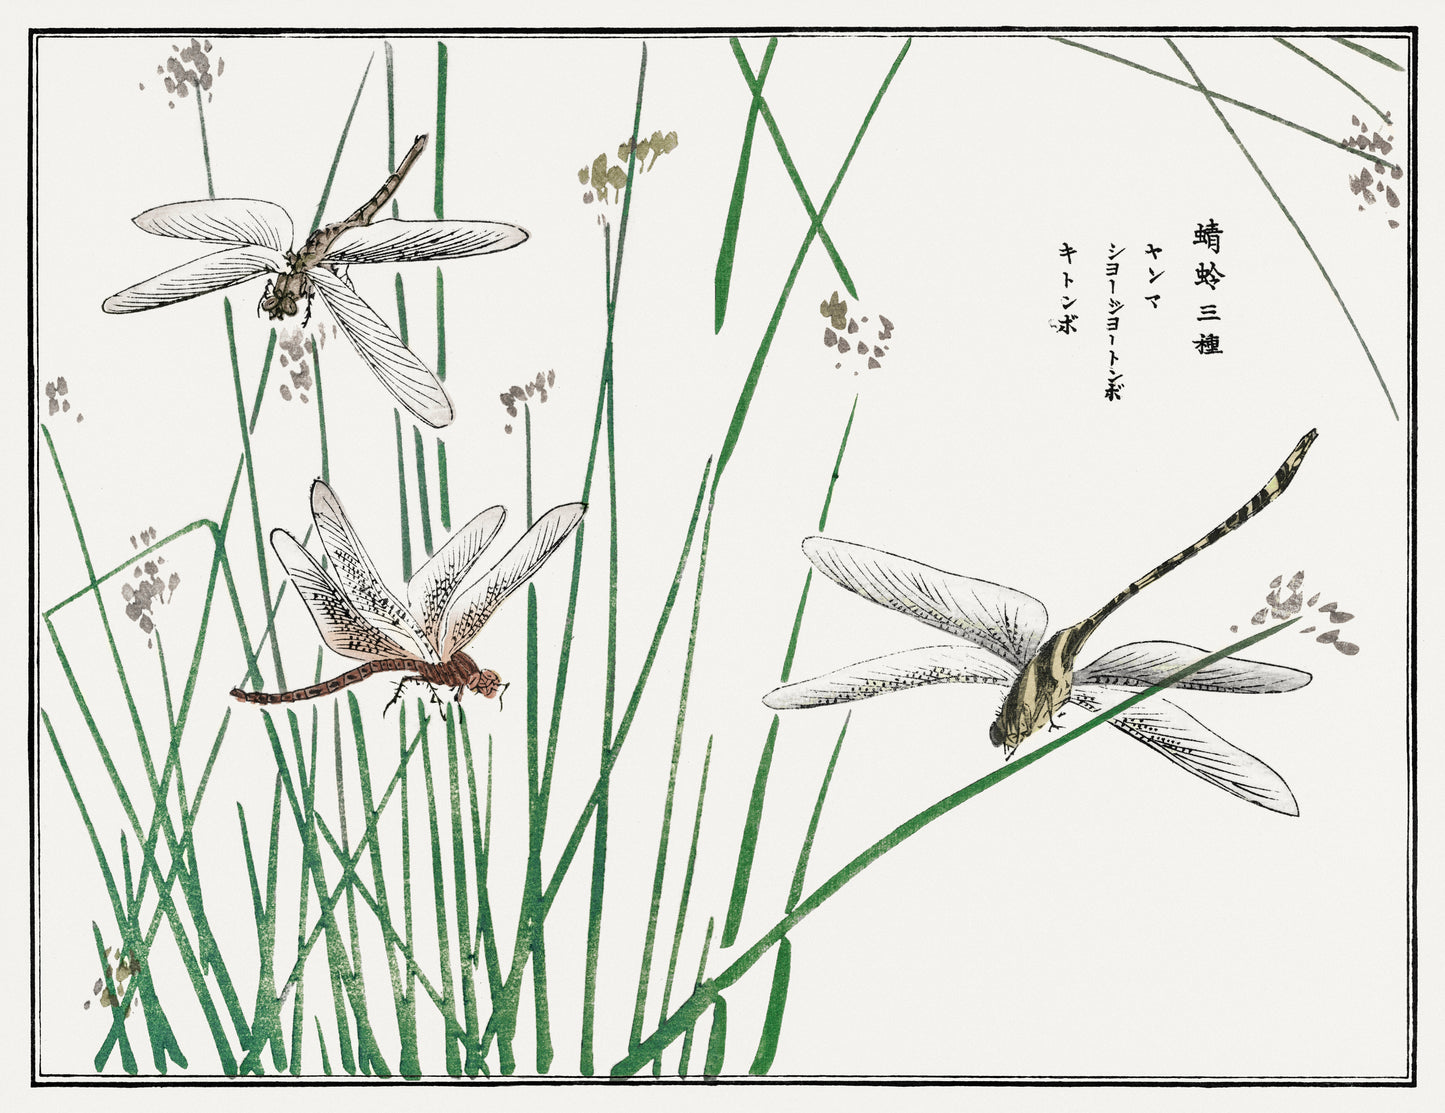 Morimoto Toko Insect & Botanical Woodblock Prints [24 Images]